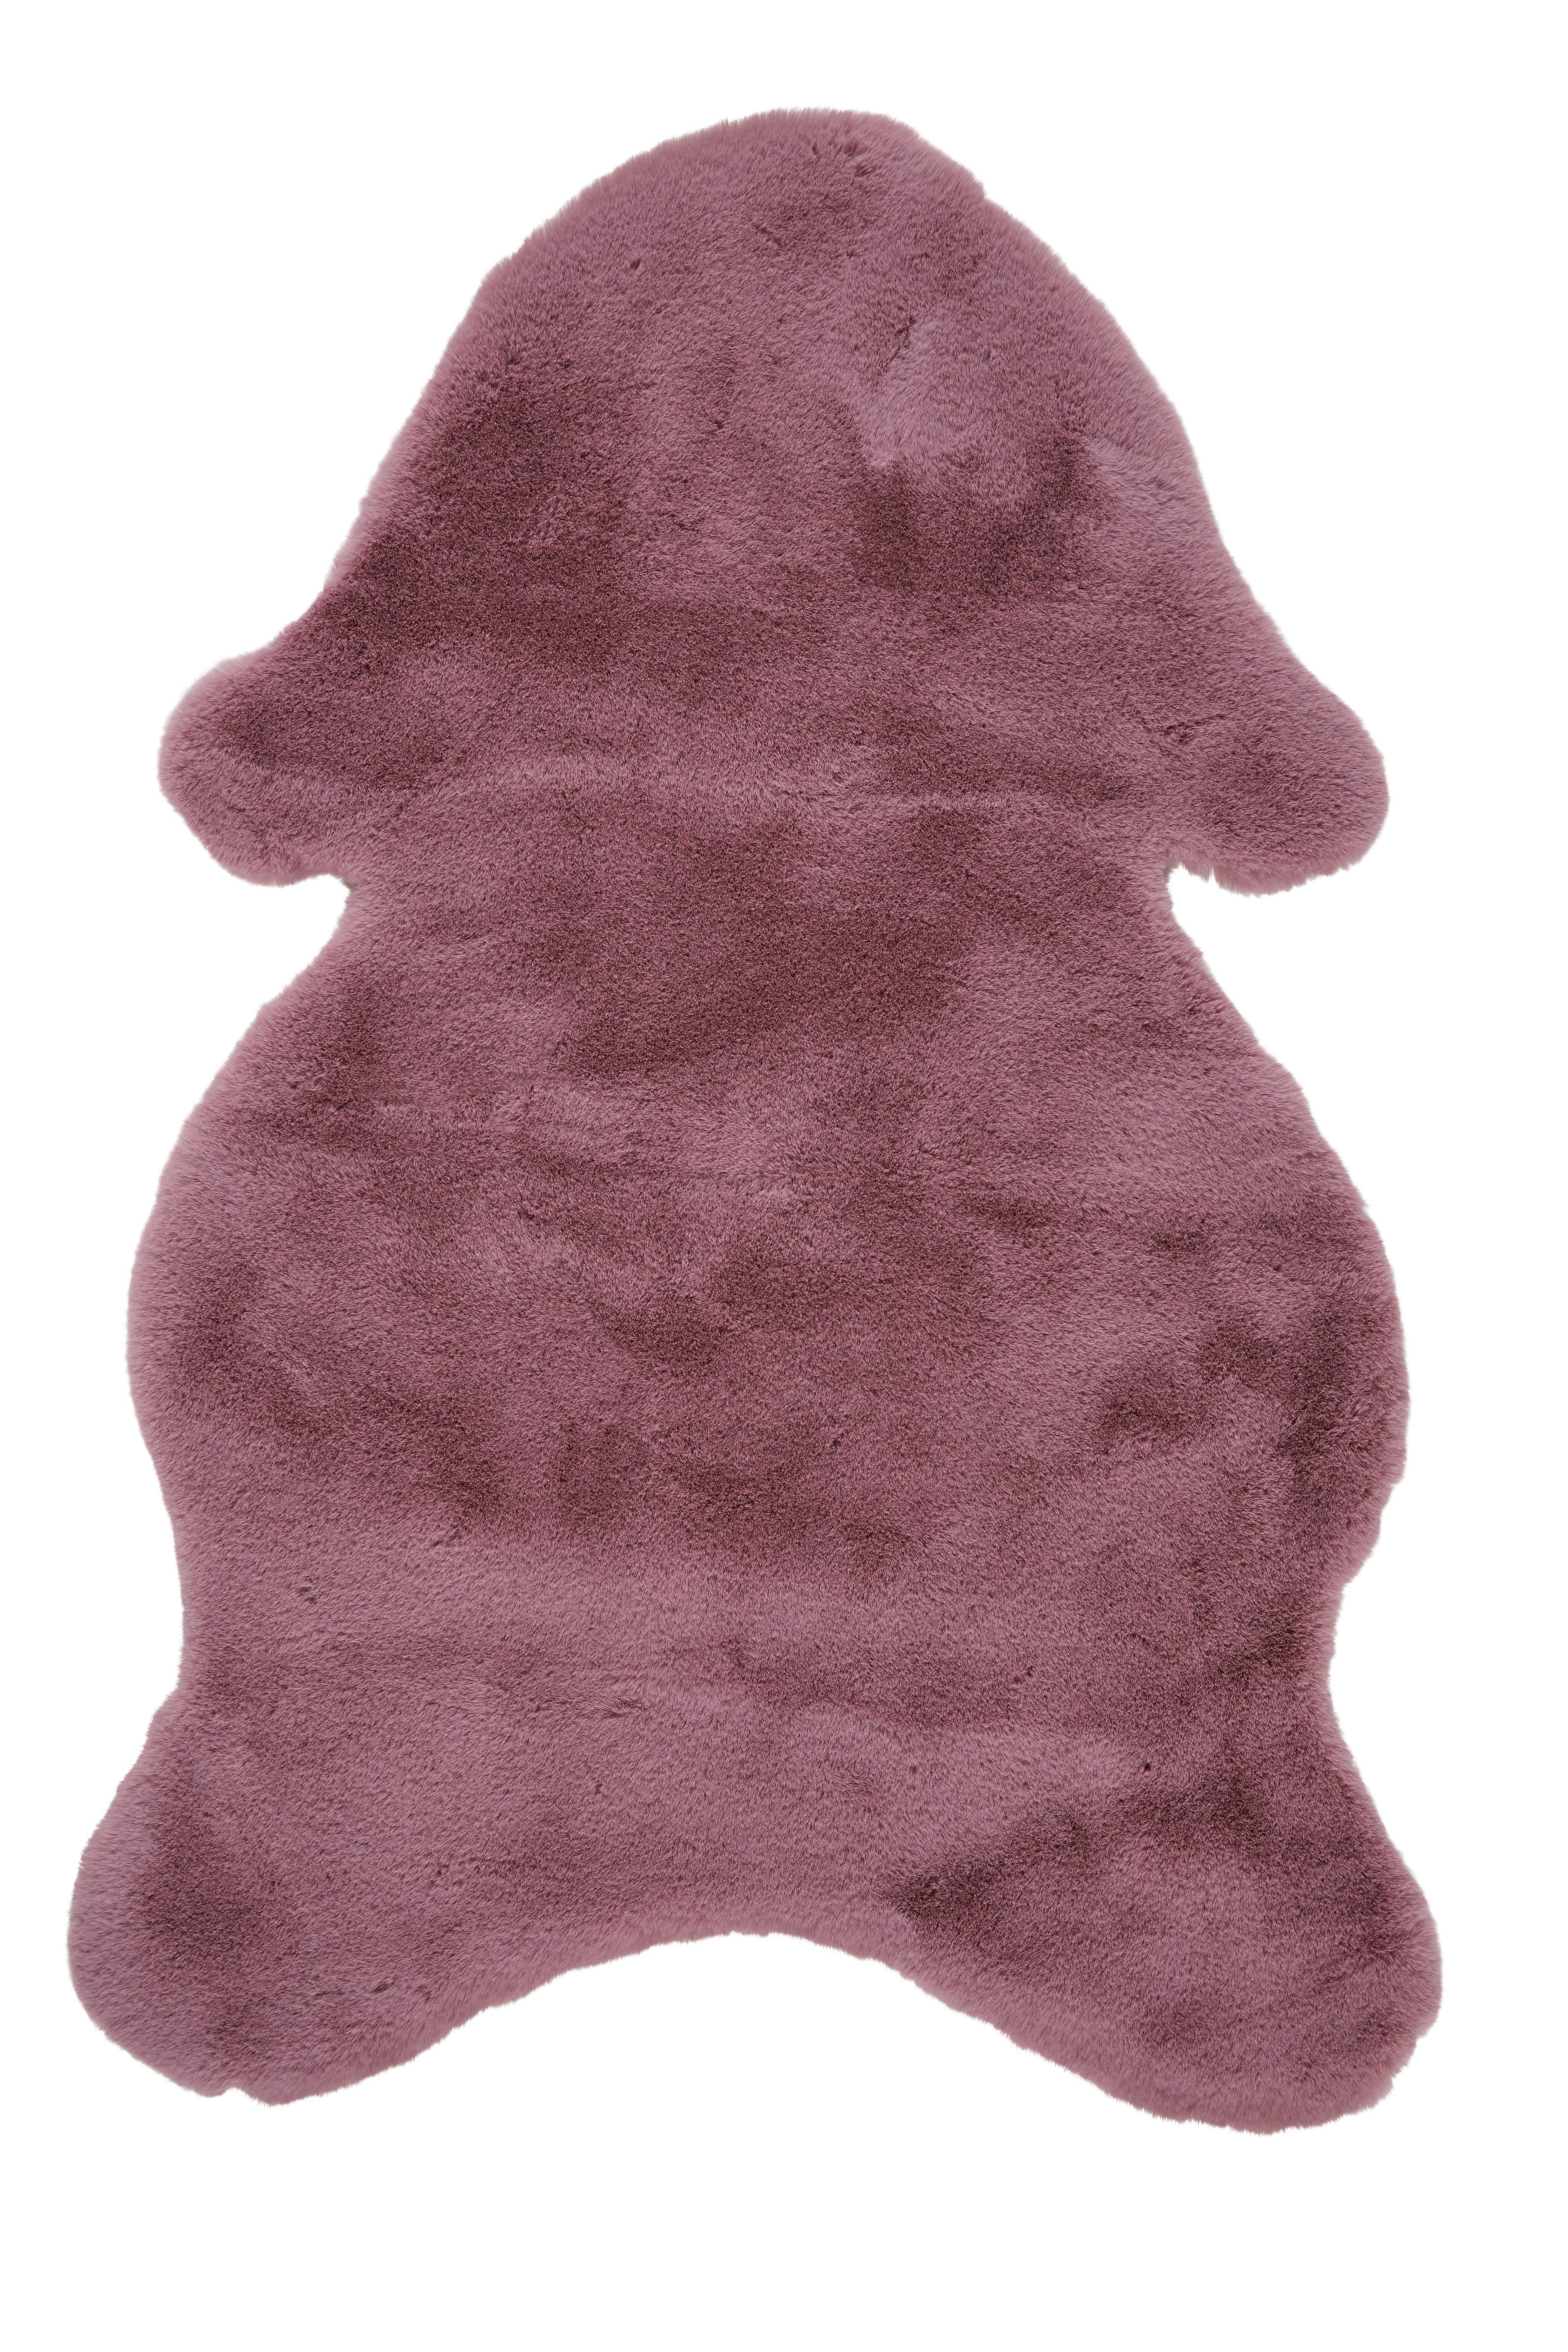 Umelá Kožušina Marlene, 90/60cm, Ružová - ružová, textil/kožušina (90/60cm) - Modern Living